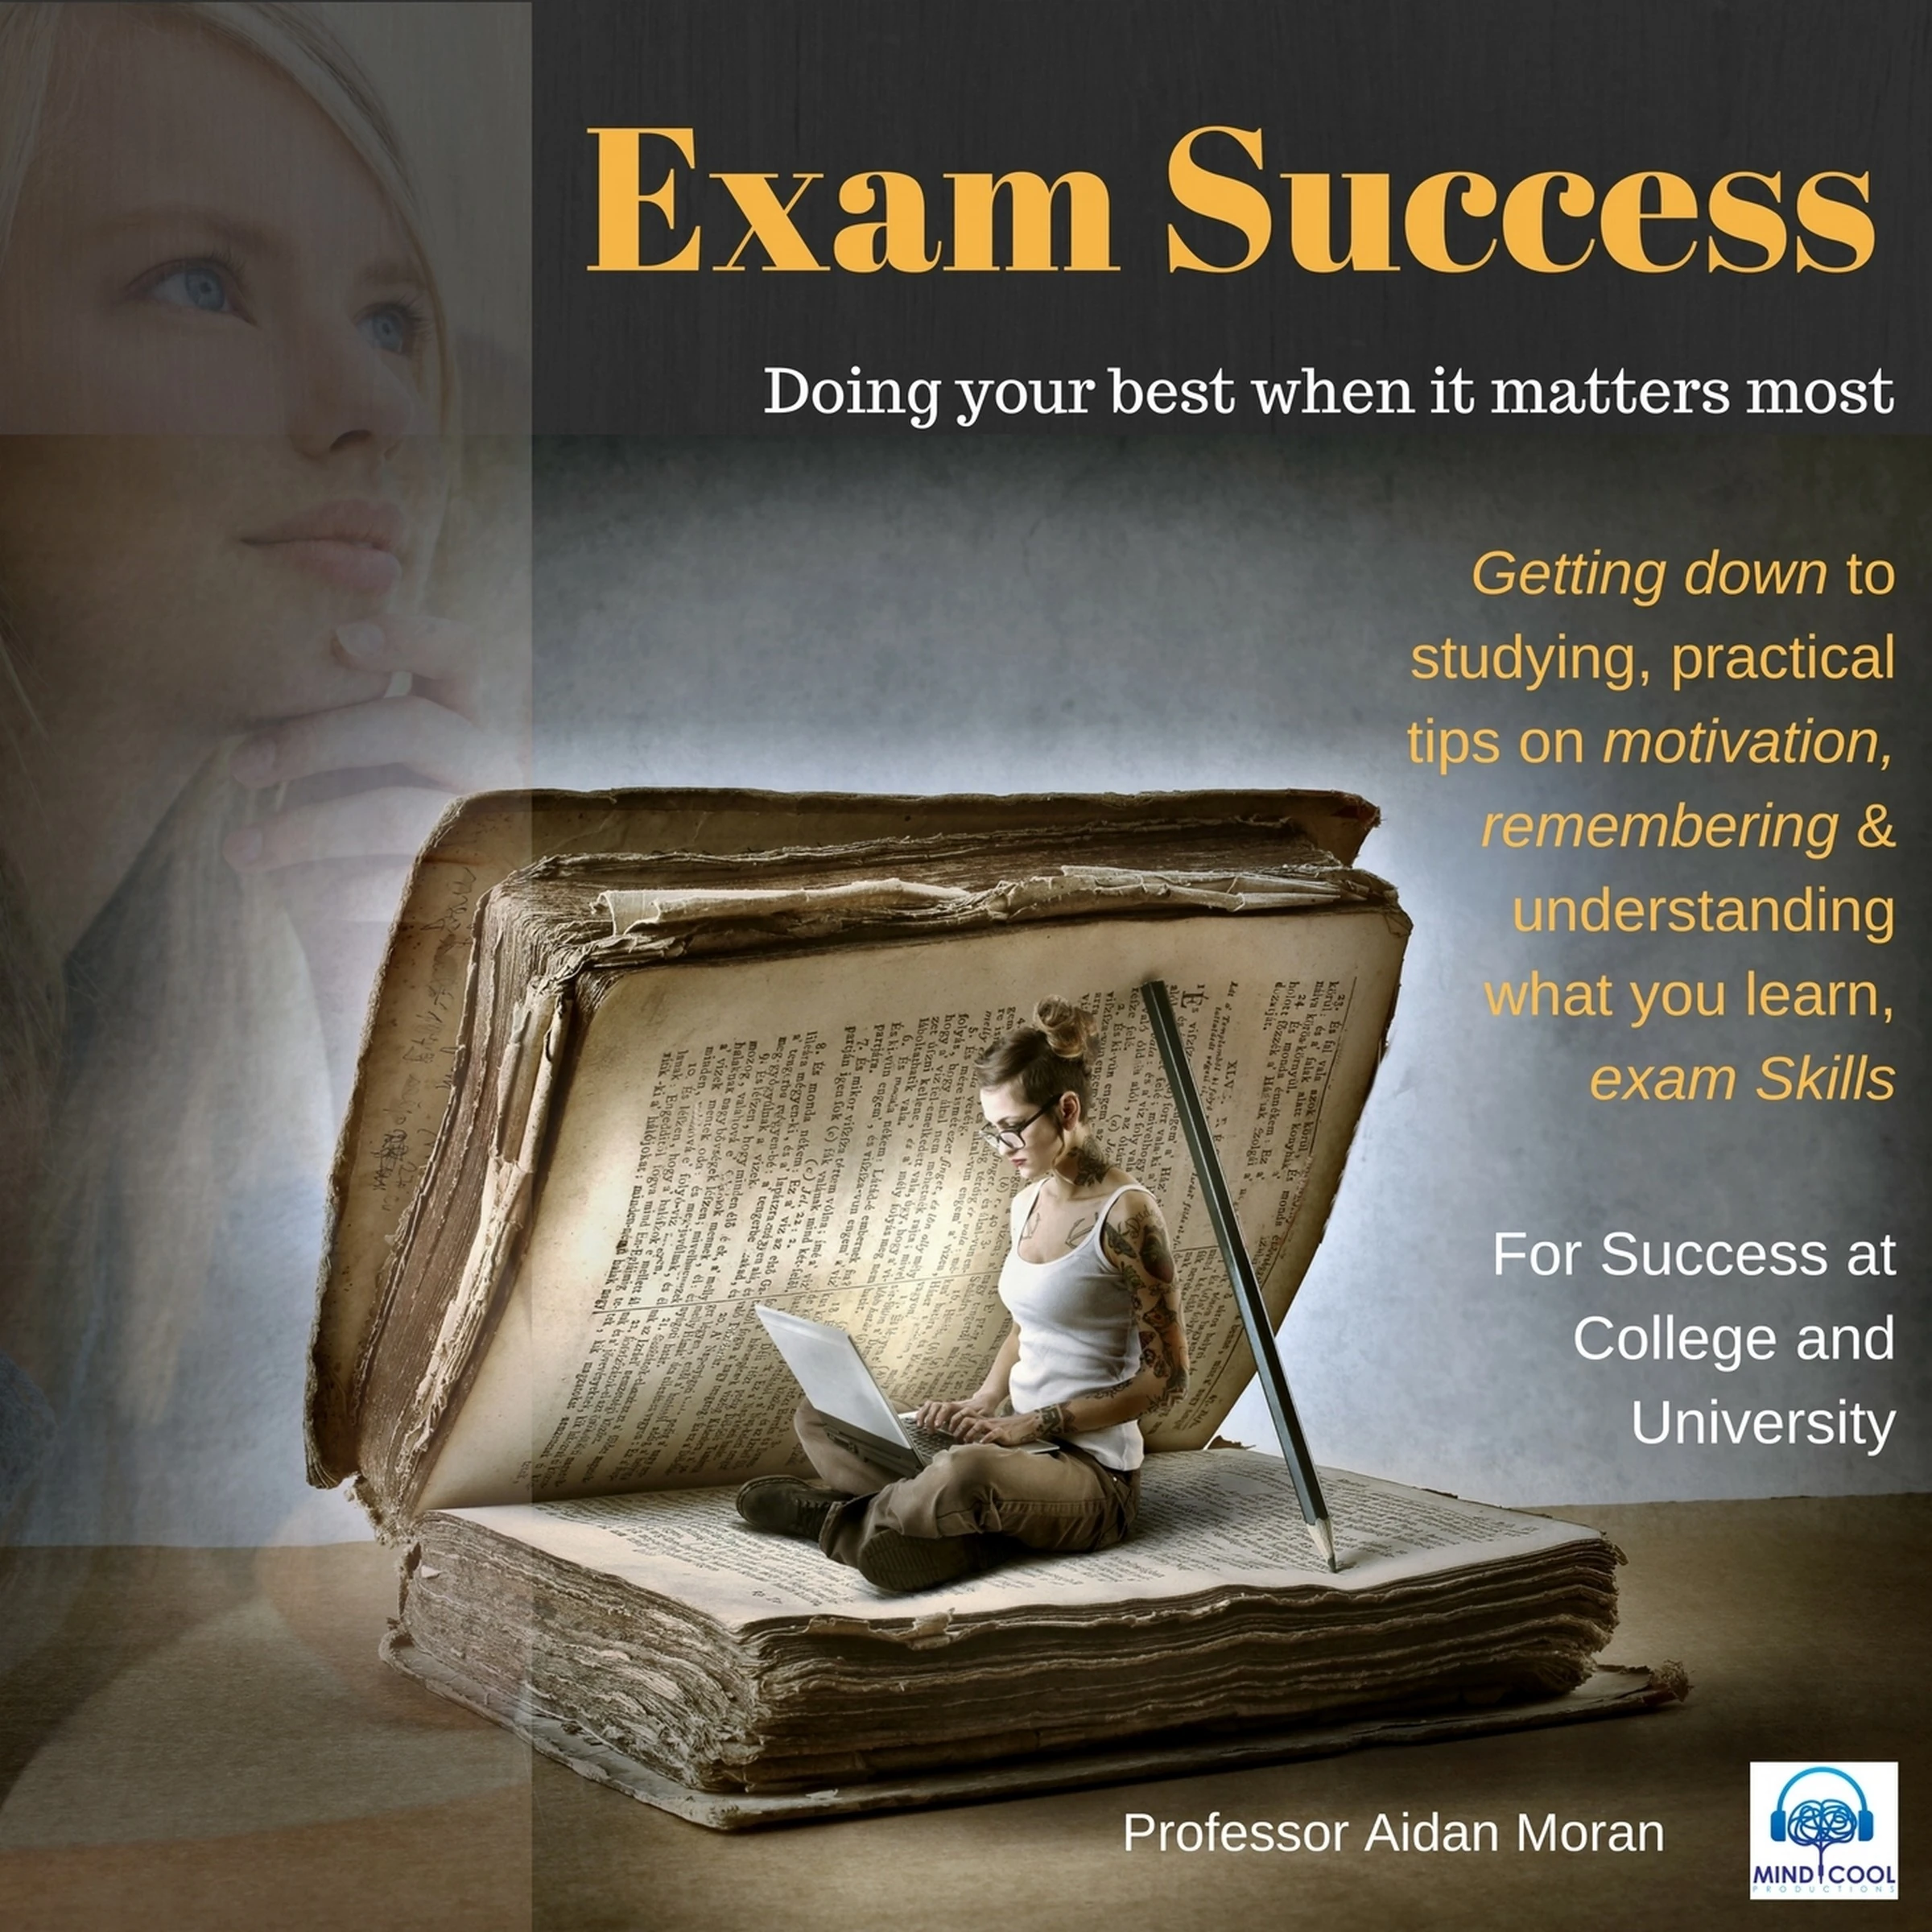 Exam Success: For Success at College and University Audiobook by Professor Aidan Moran